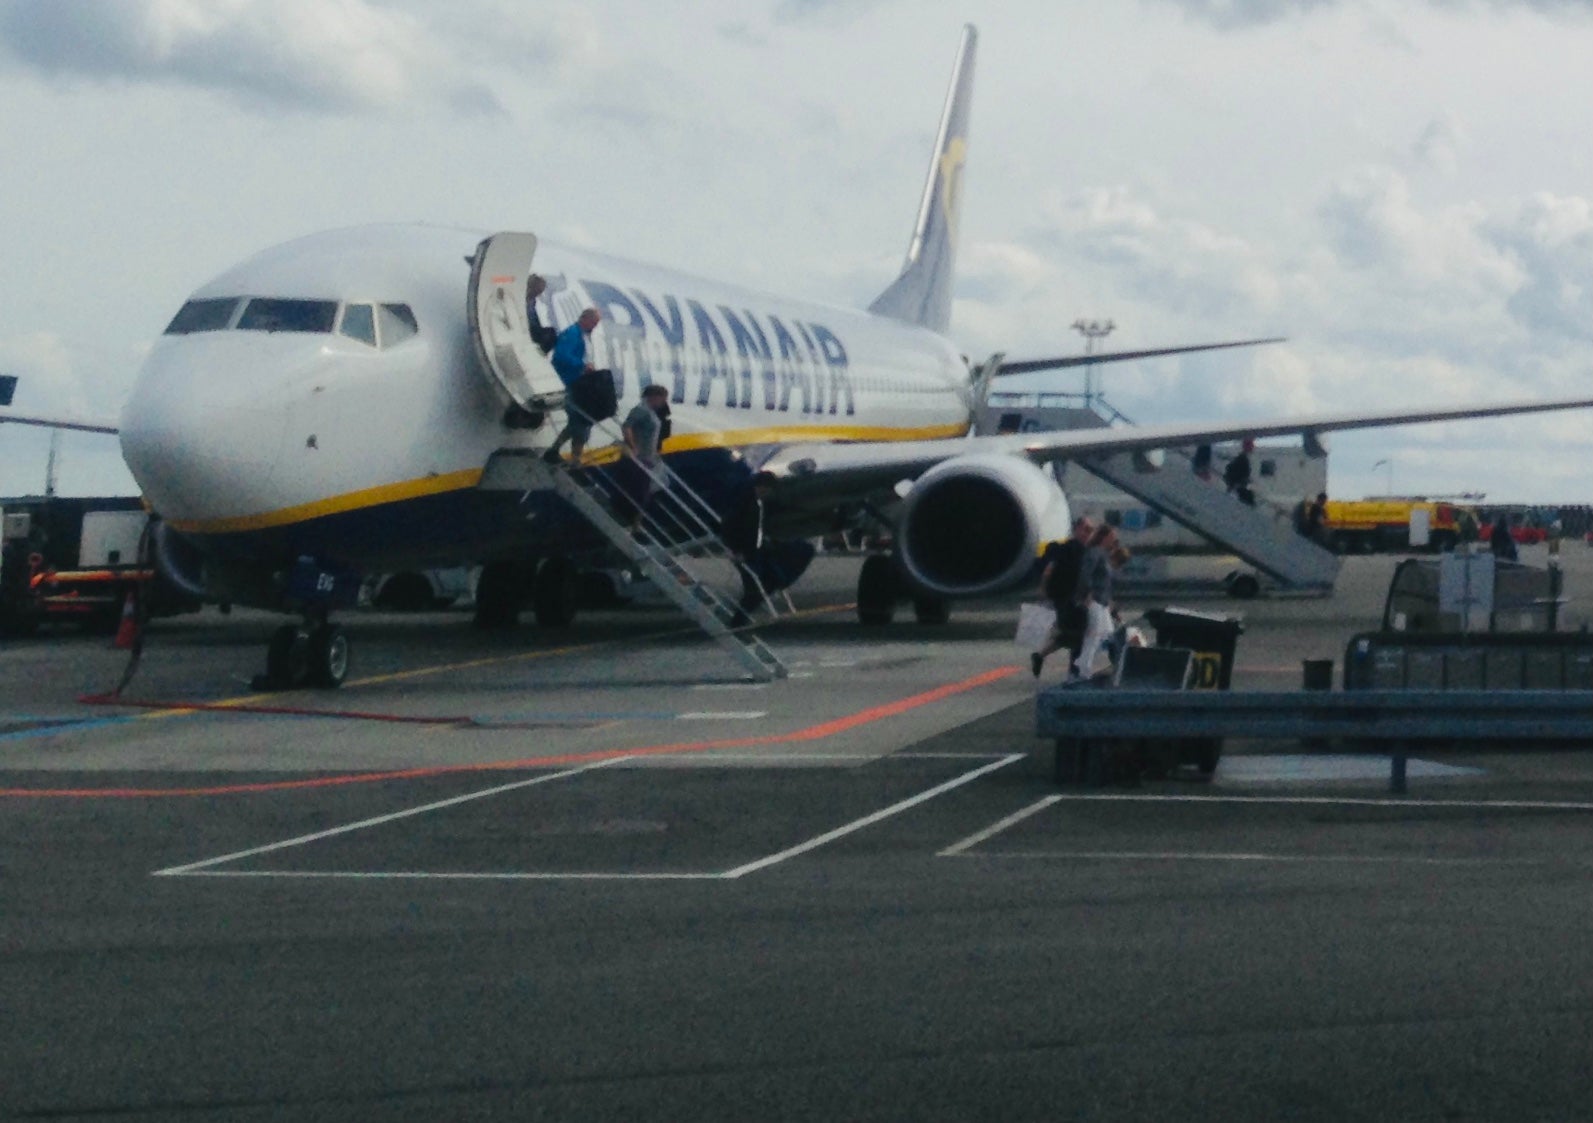 Danish arrival: a Ryanair flight from London to Copenhagen (file photo)